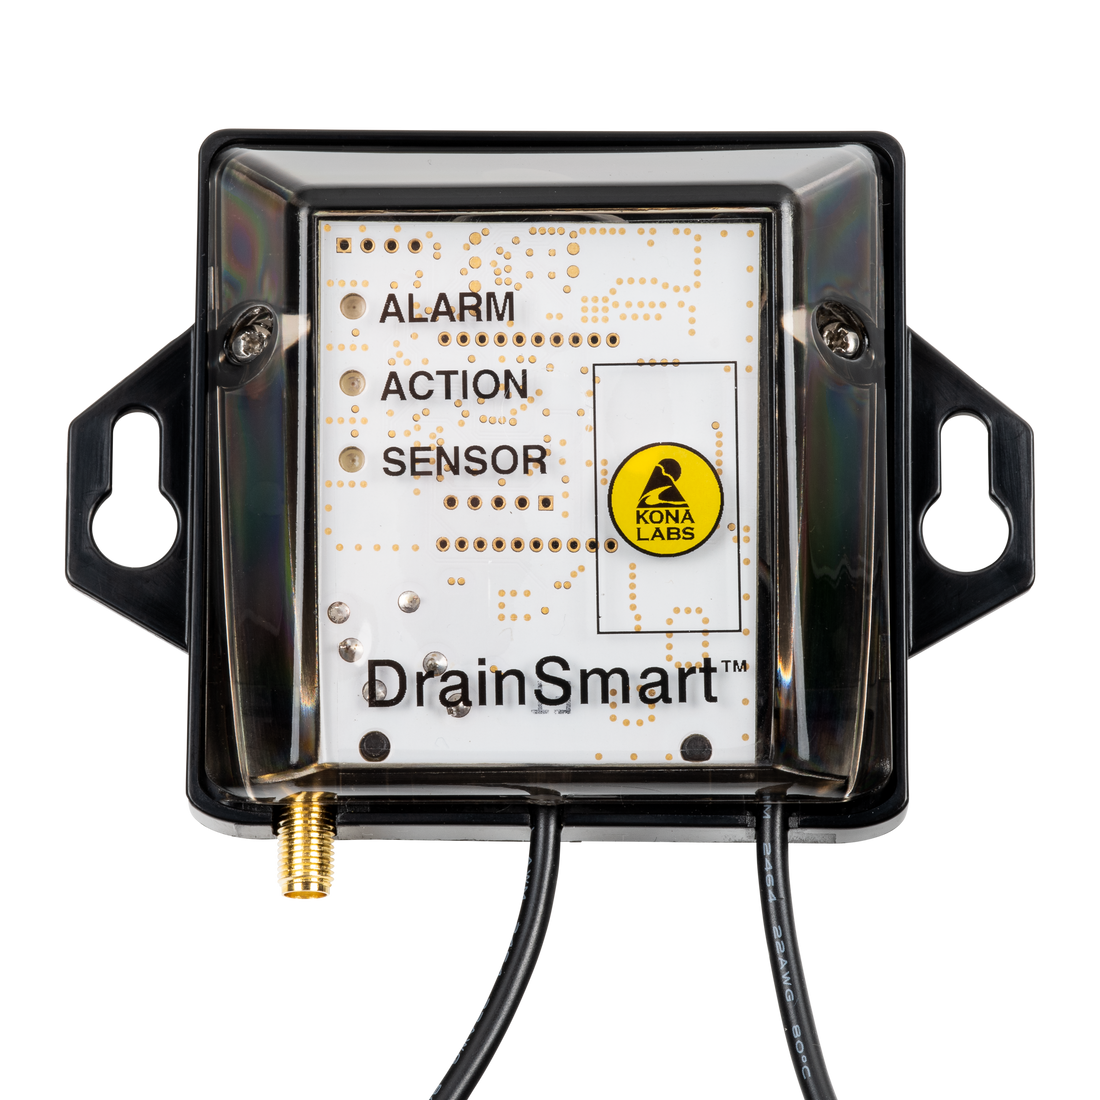 The DrainSmart Draining System - revolutionizing water management